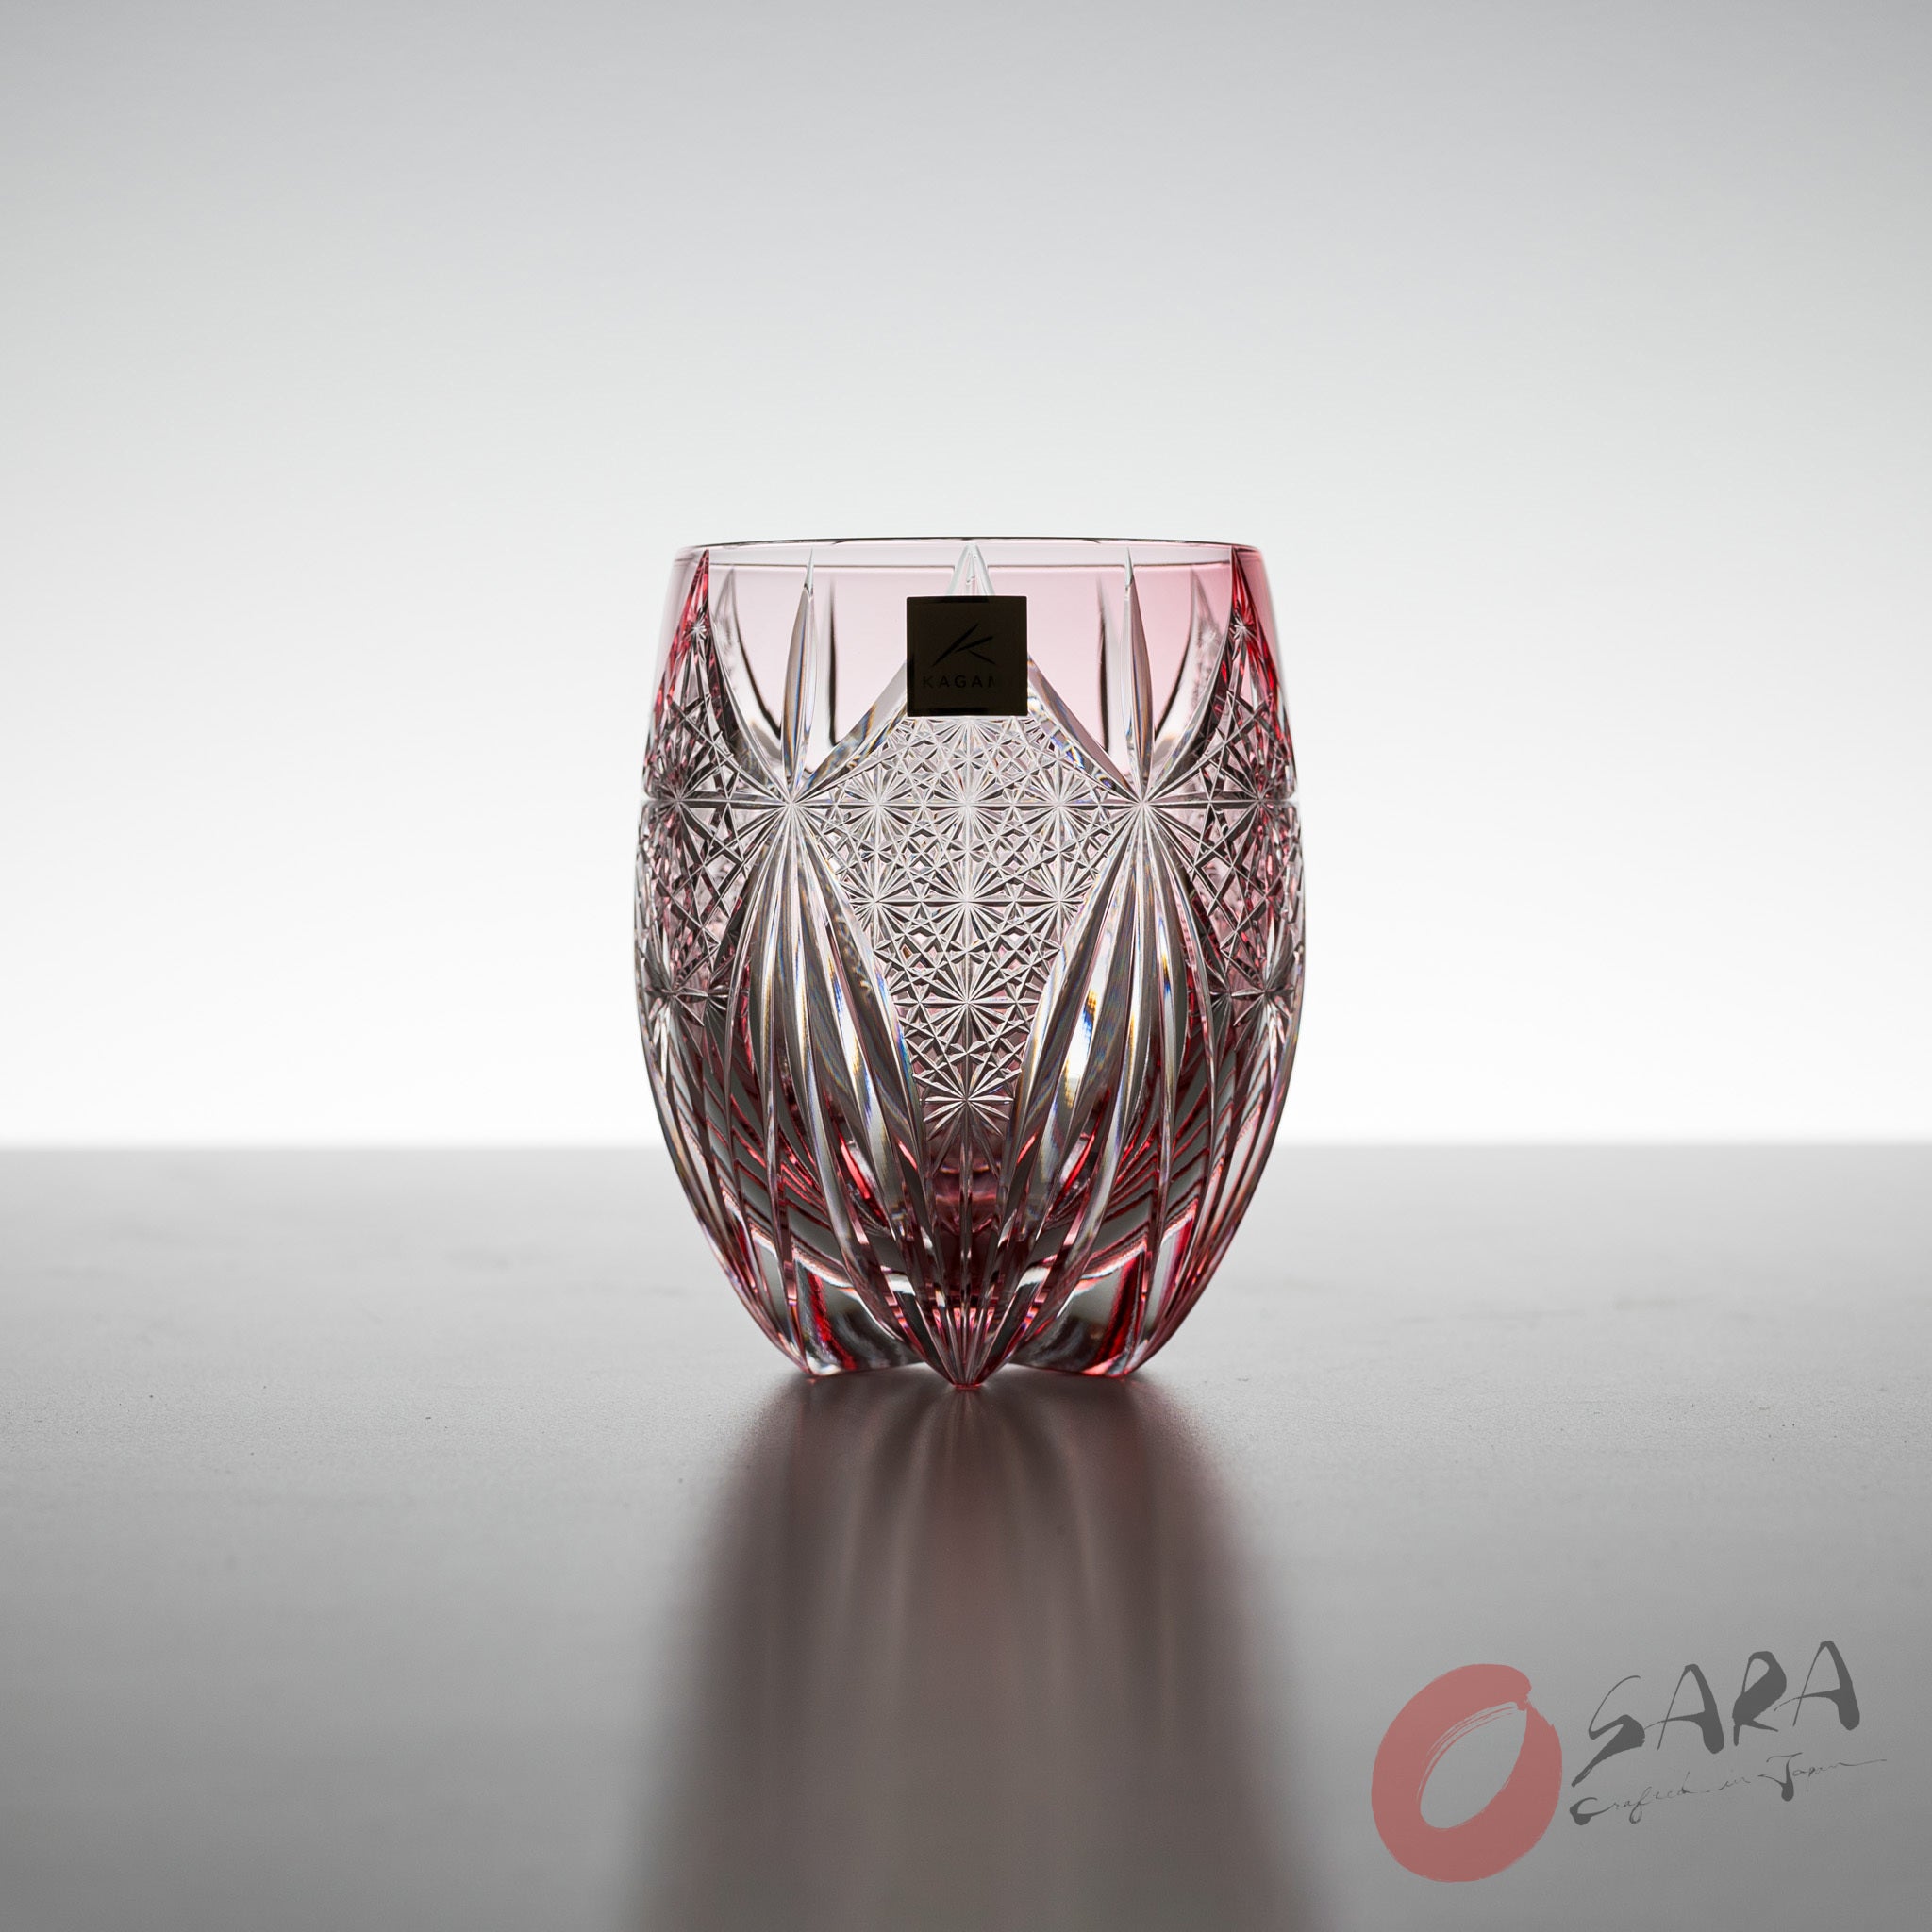 KAGAMI Crystal Round Rock Glass - Subaru Pink / 昴